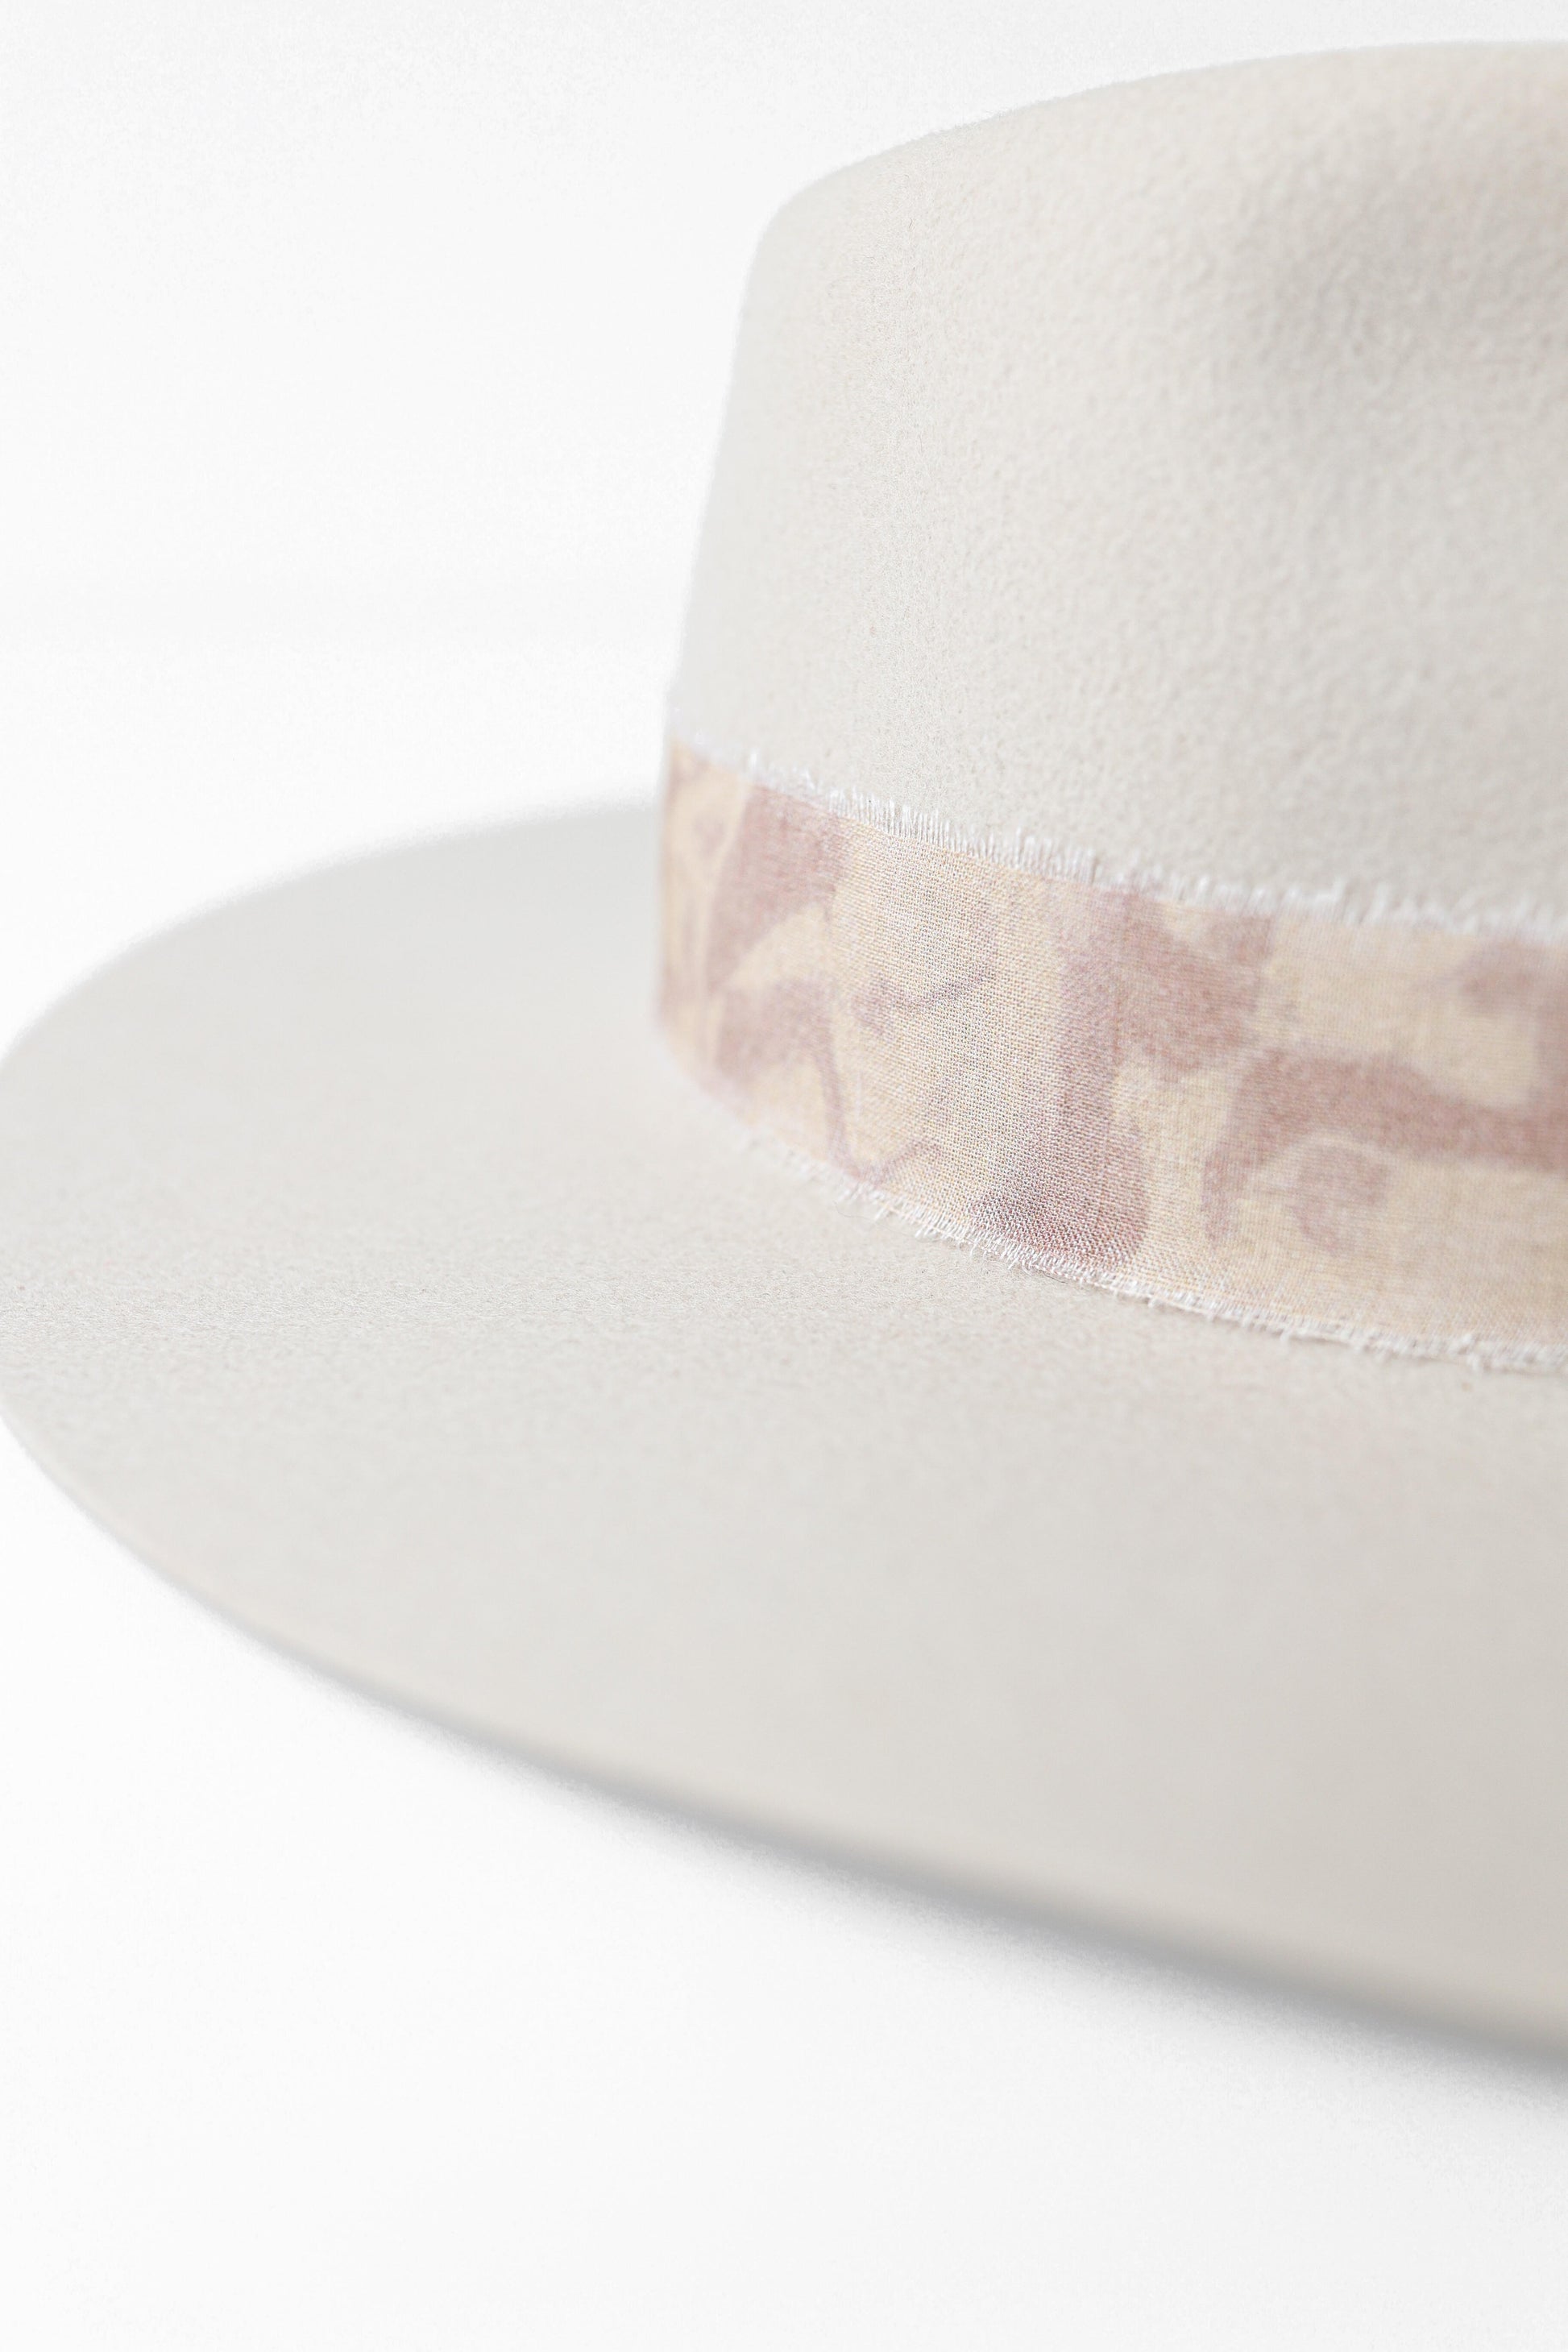 Fabric Hat Band – Brim + Band